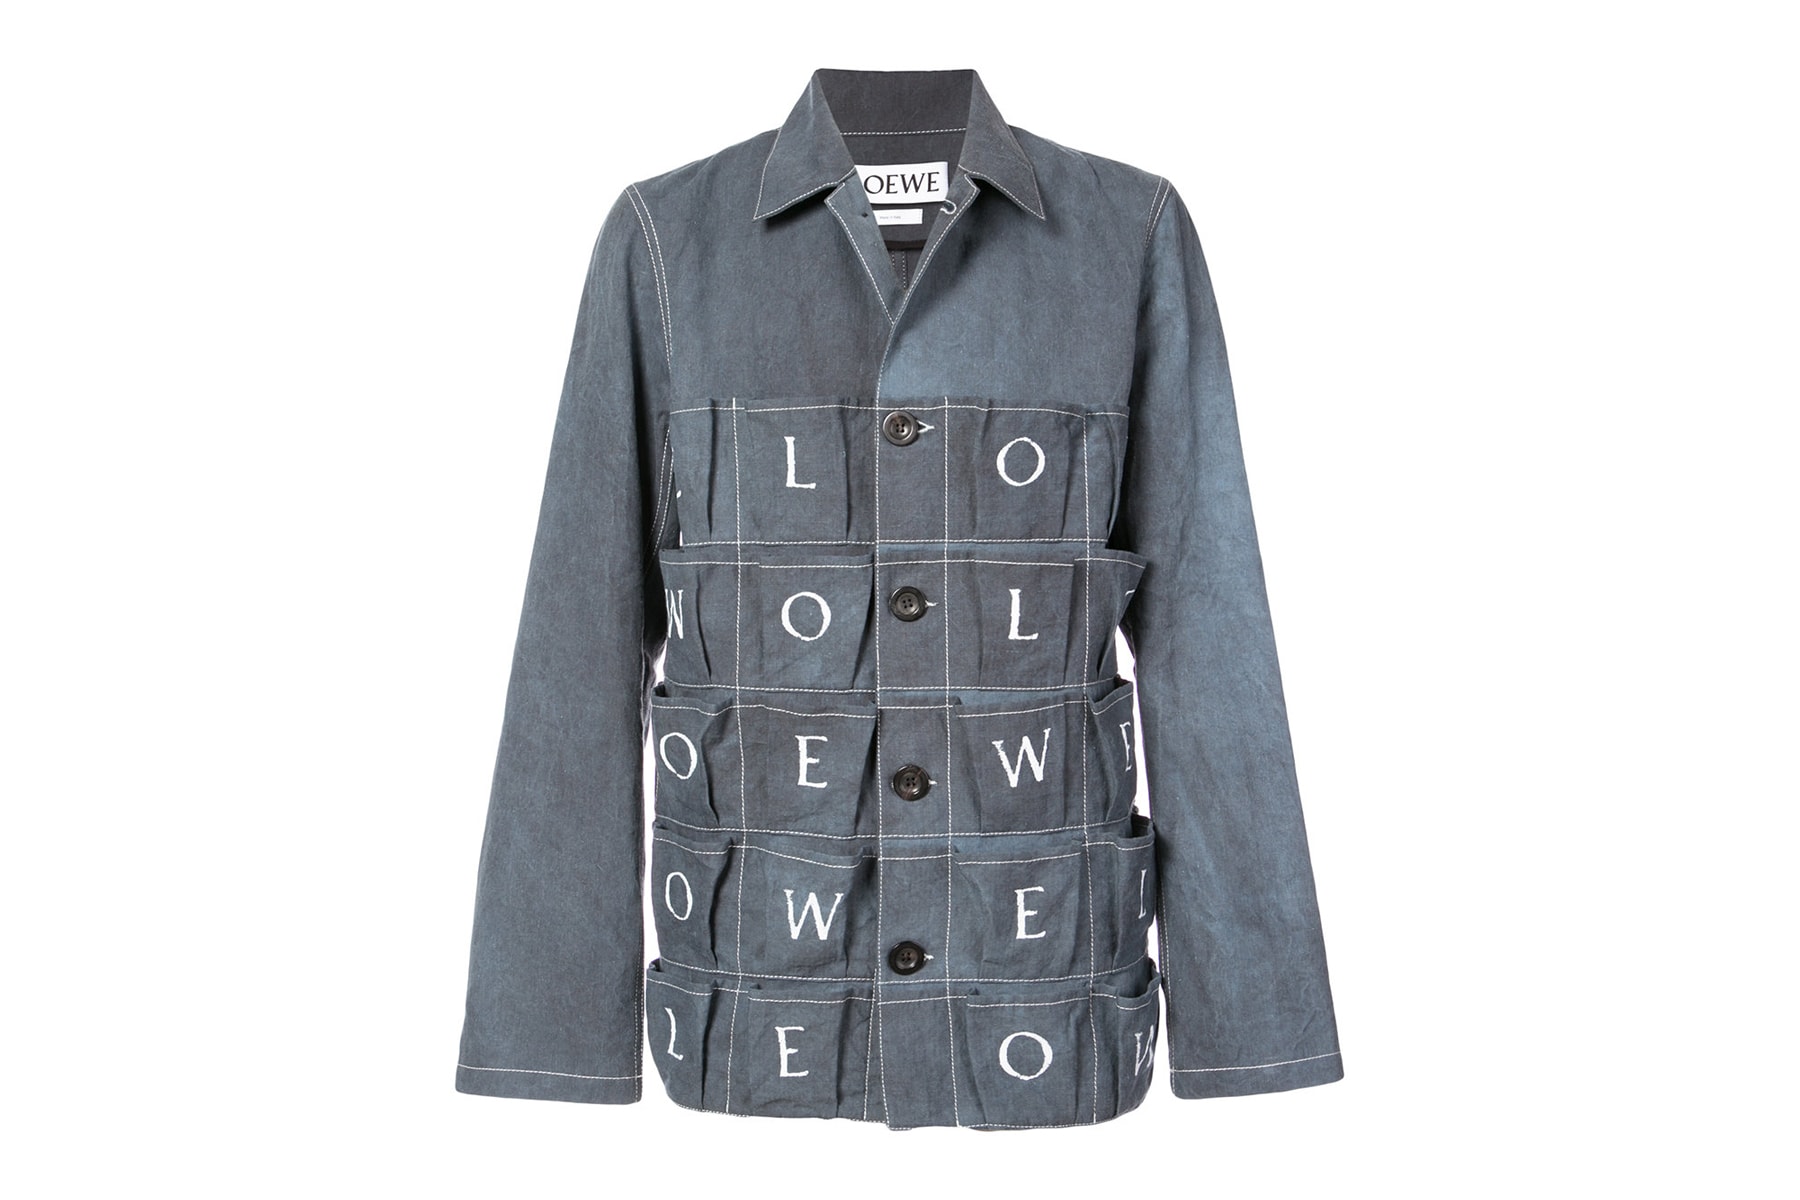 Loewe letters jacket Spring Summer 2018 cotton linen jonathon jw anderson collection shirt pockets